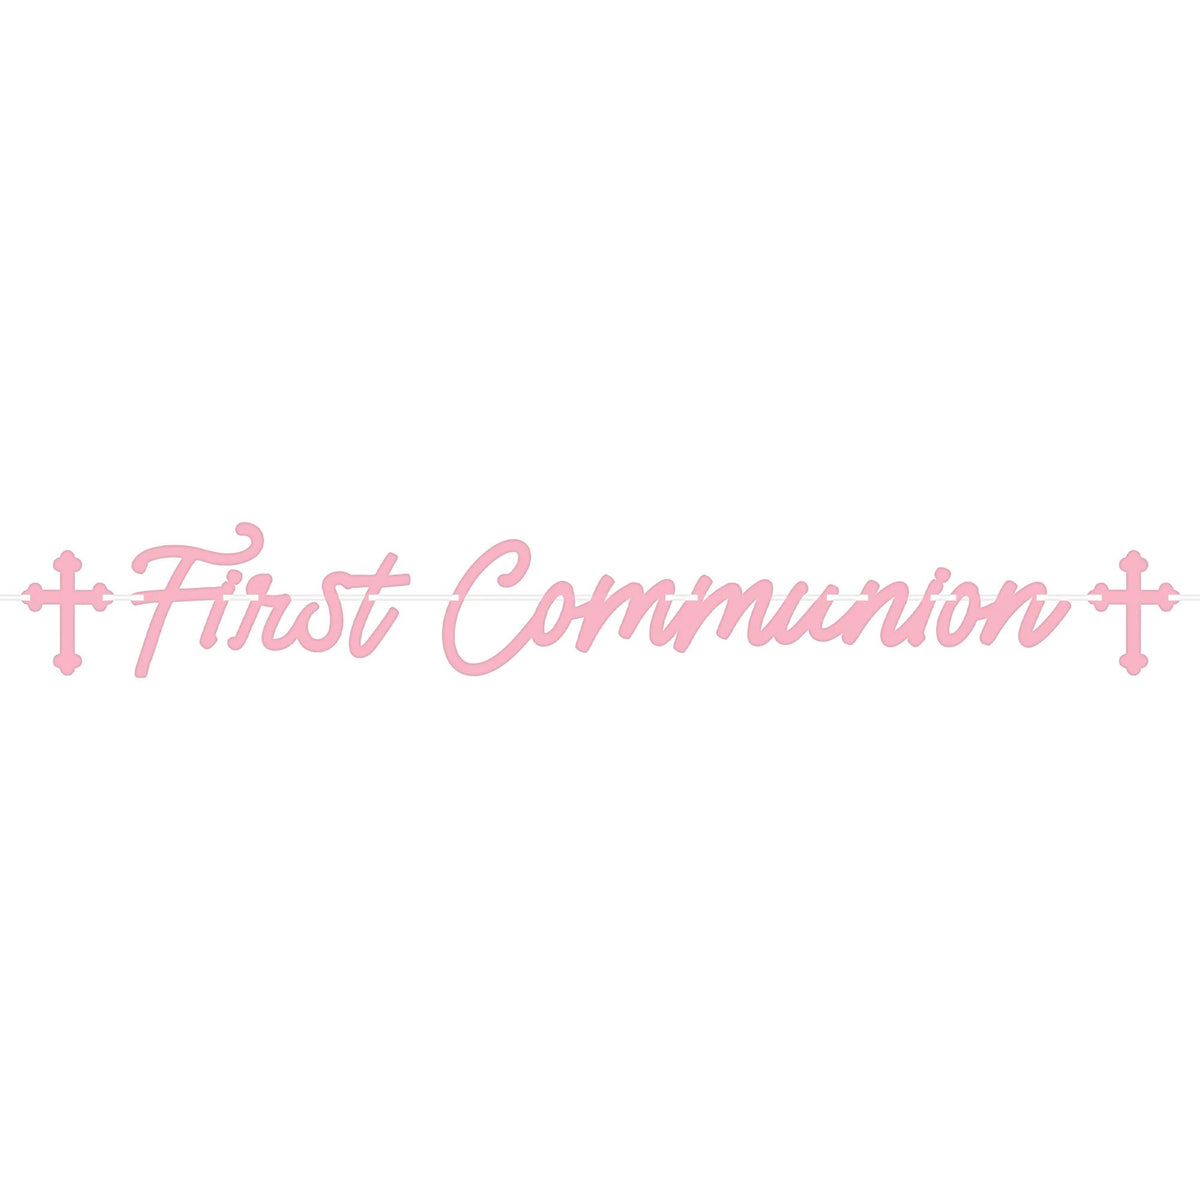 First Communion Banner - Pink